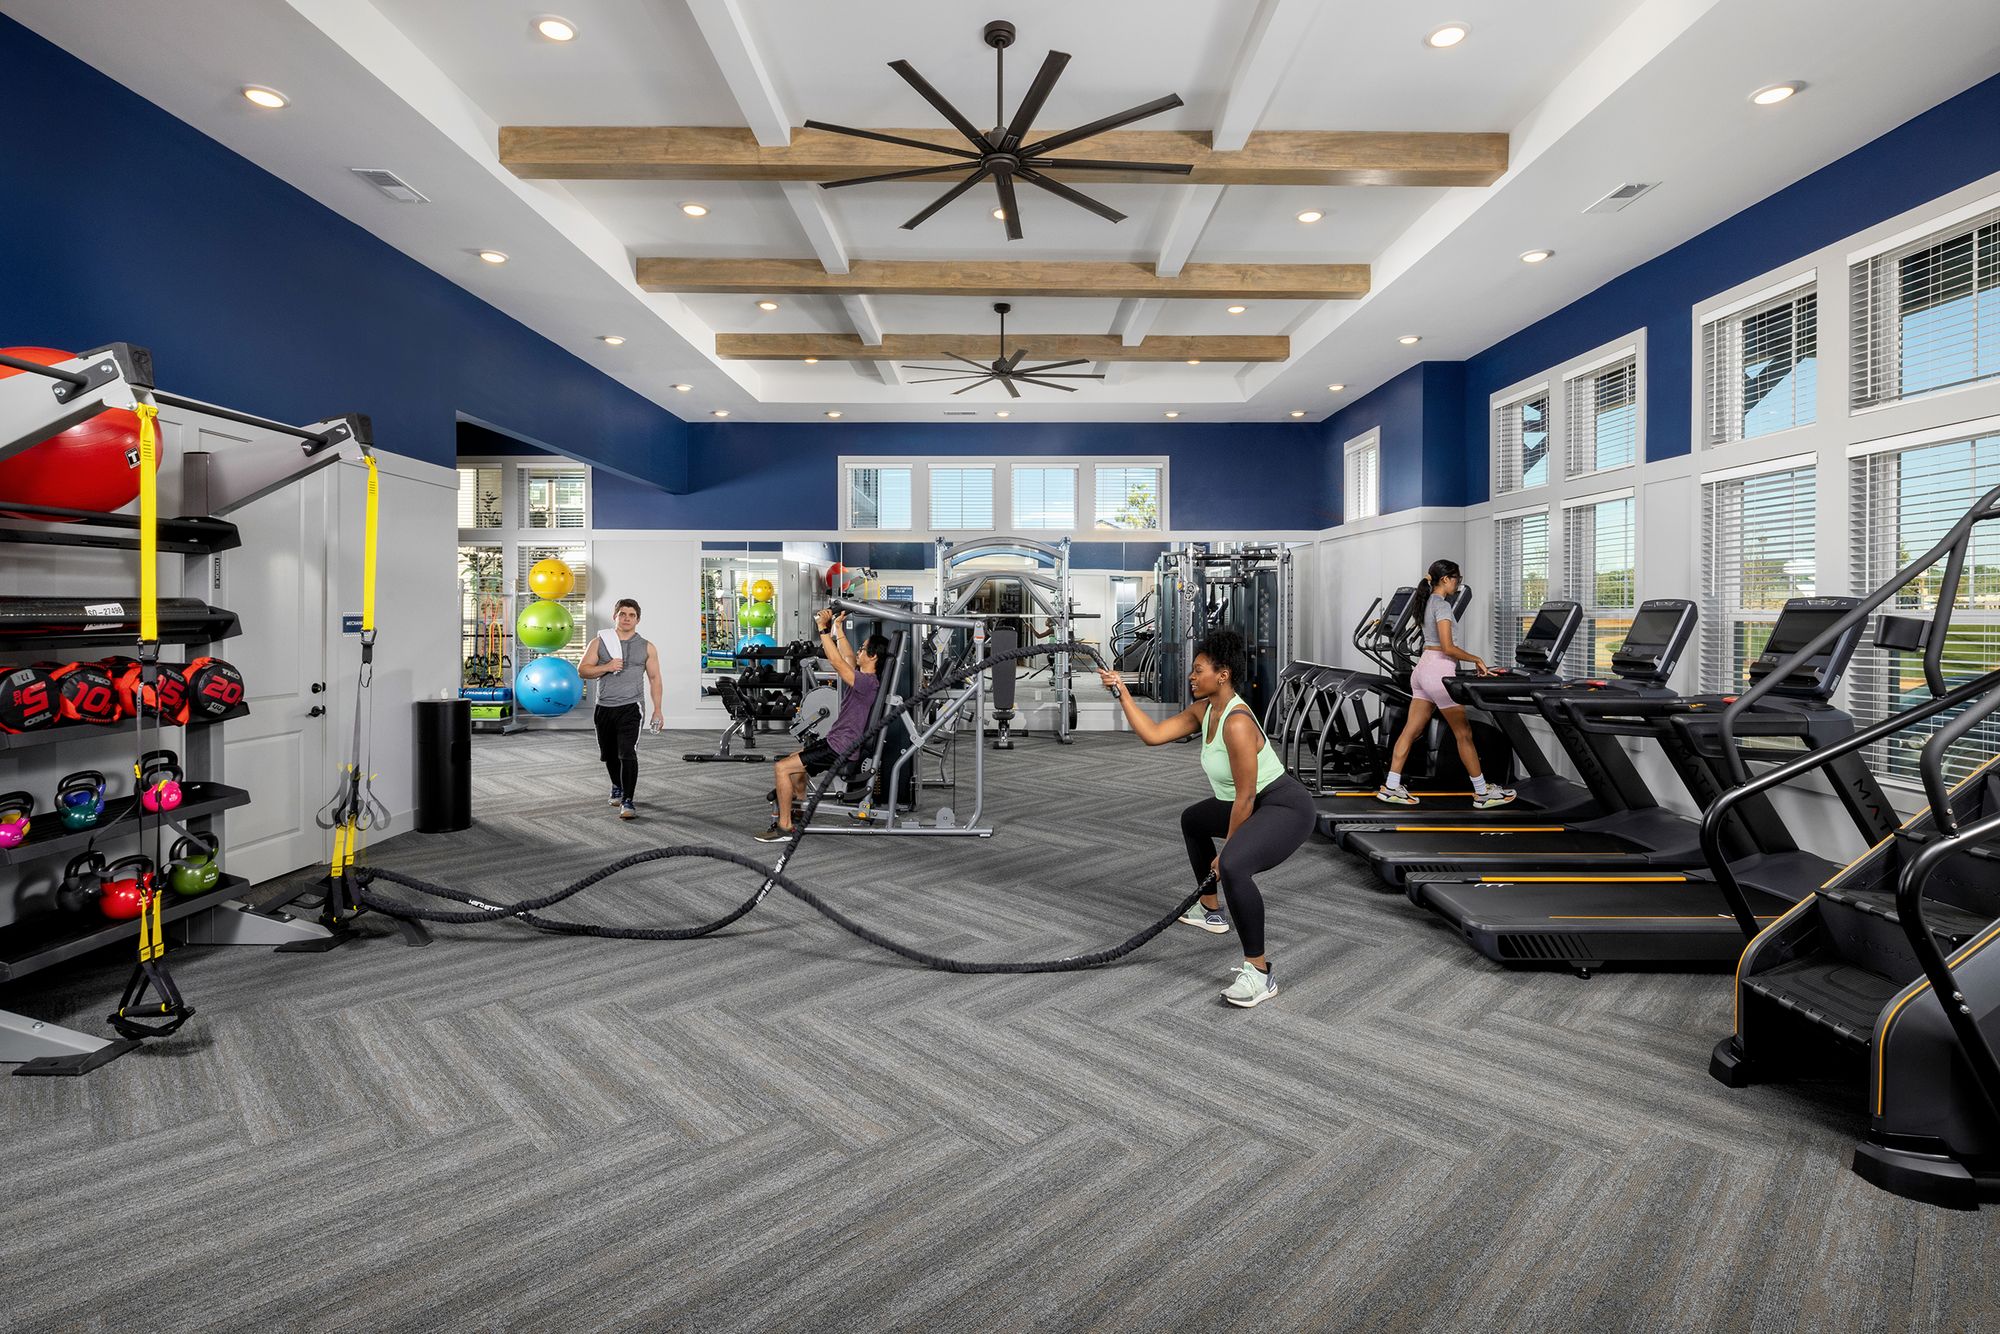 Fitness center at Story Sanfor apartments in sanford FL